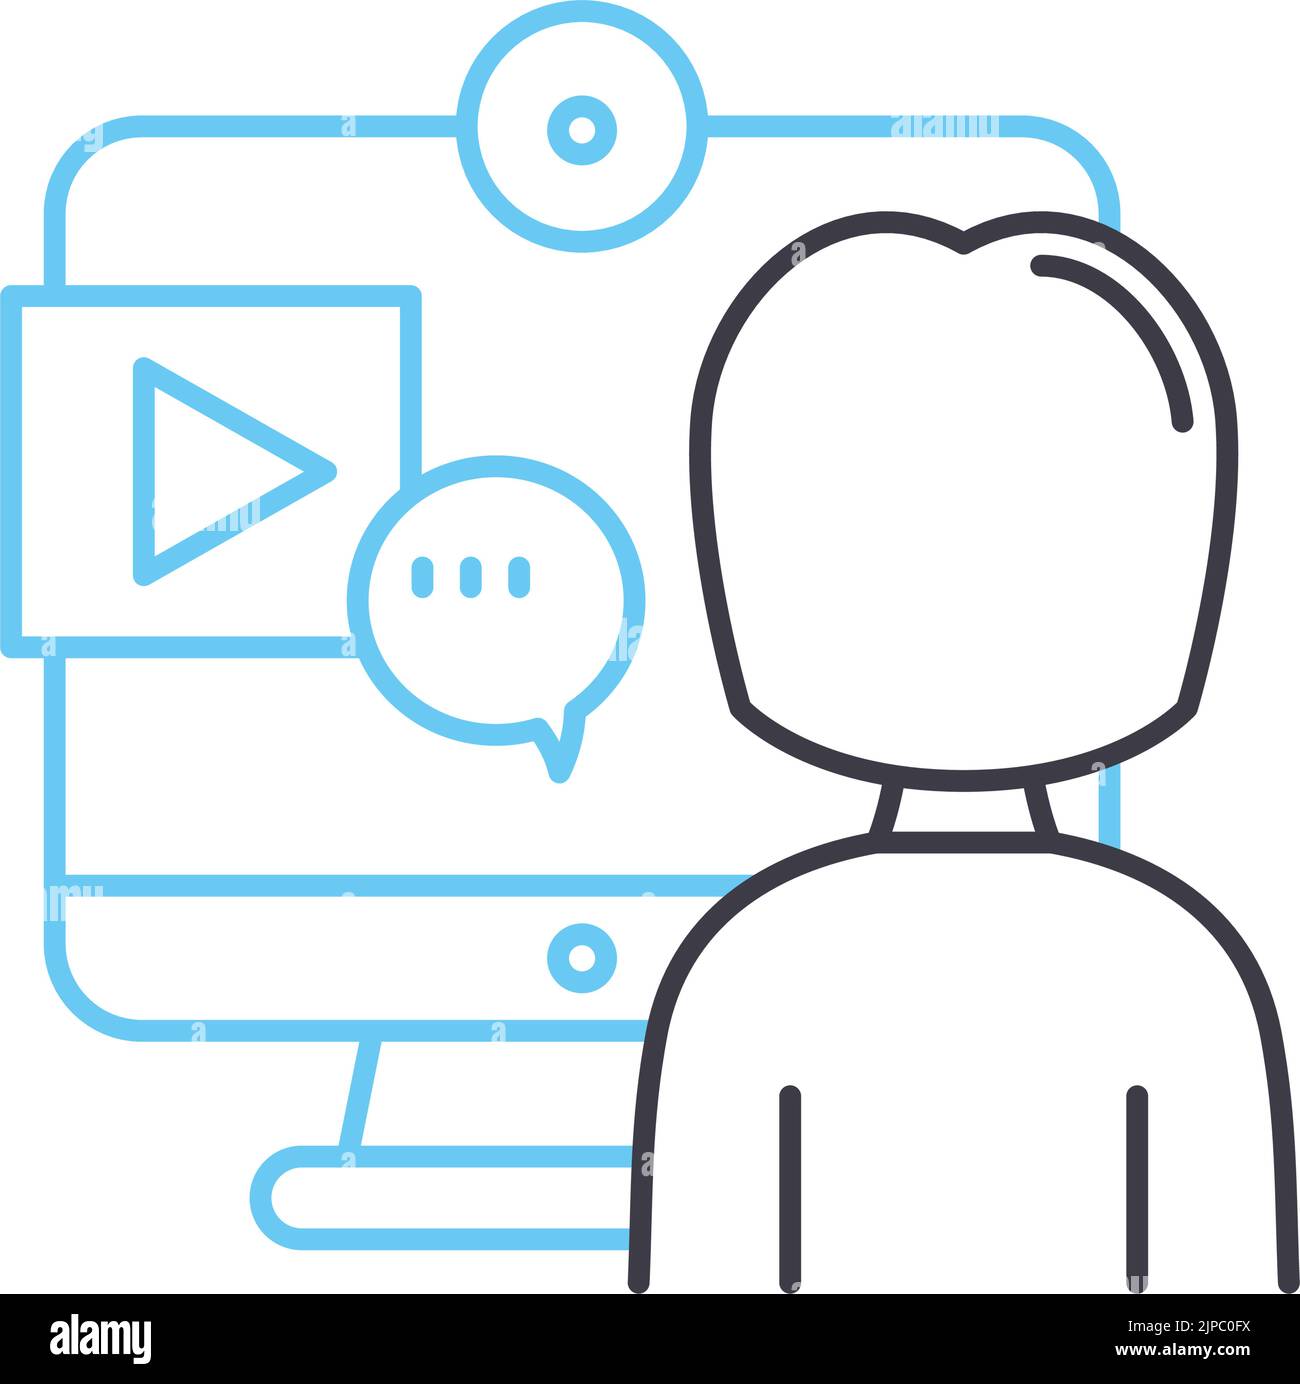 videoblog line icon, outline symbol, vector illustration, concept sign Stock Vector